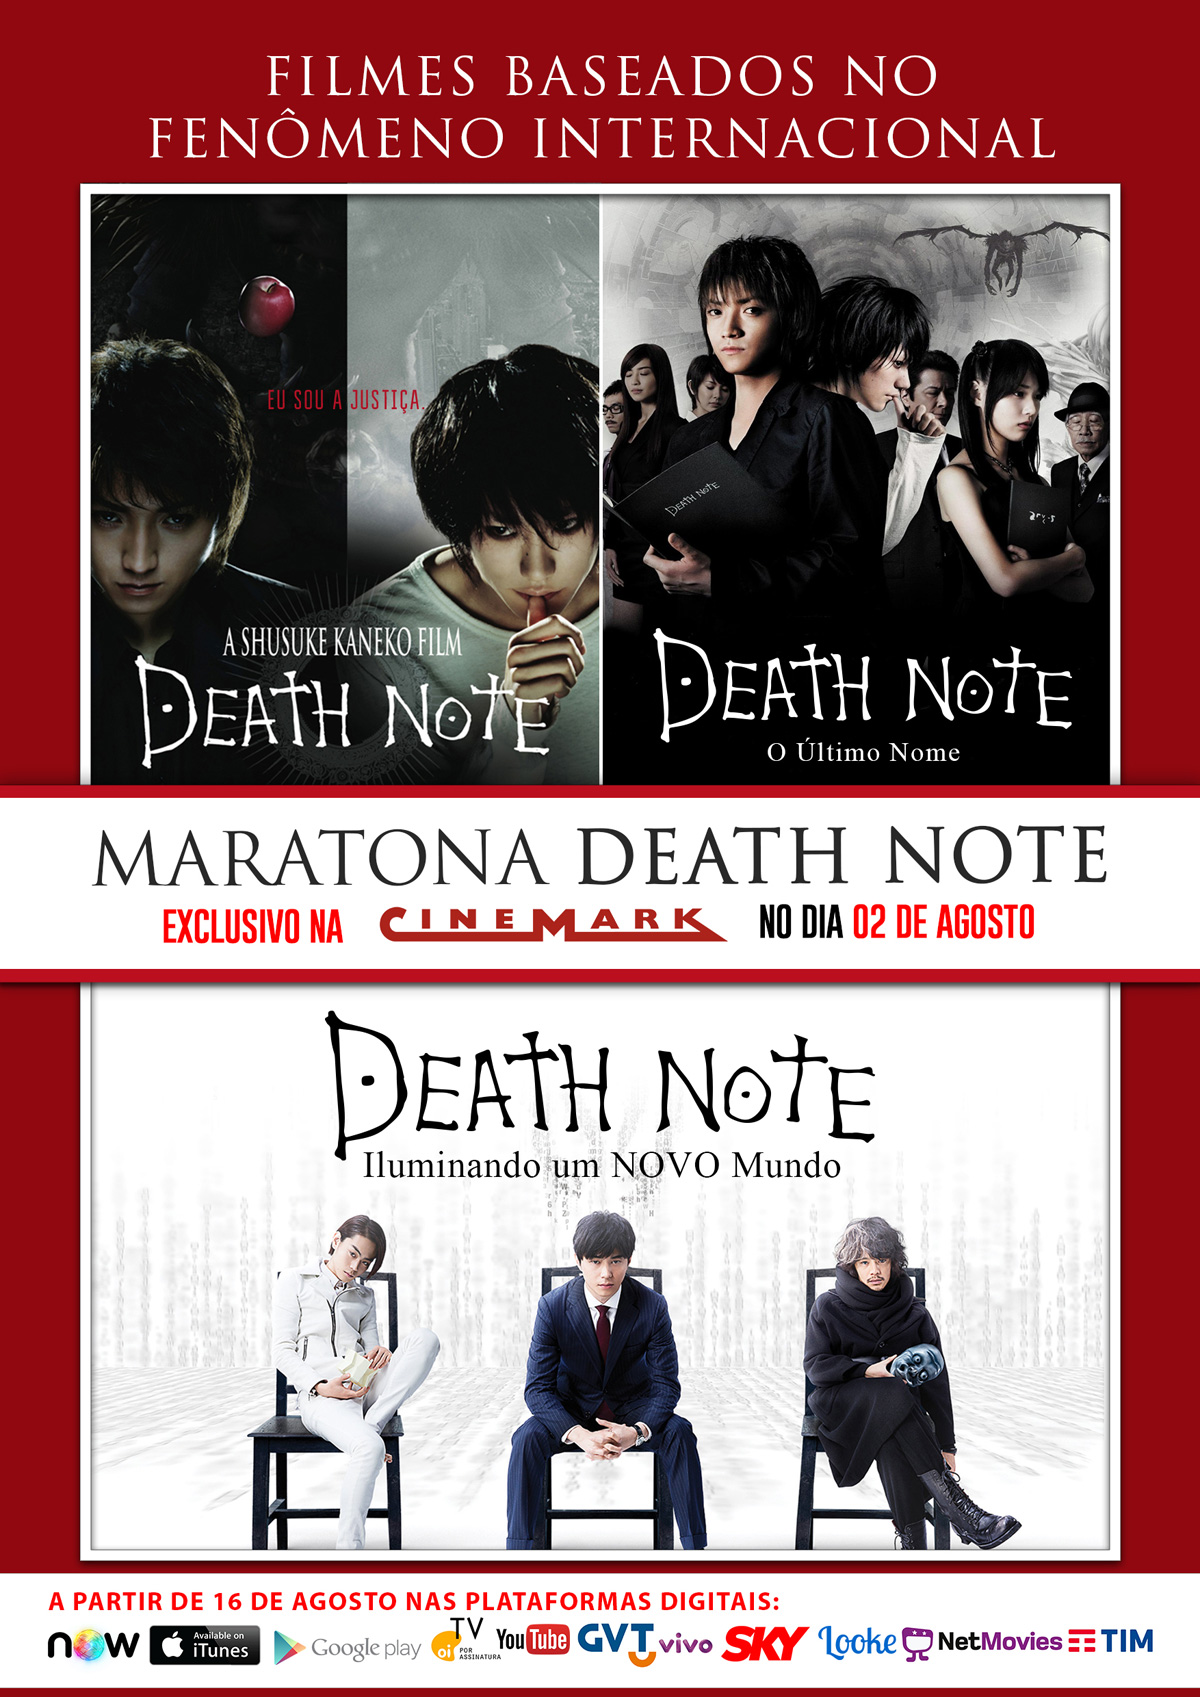 Death note maratona cinemark